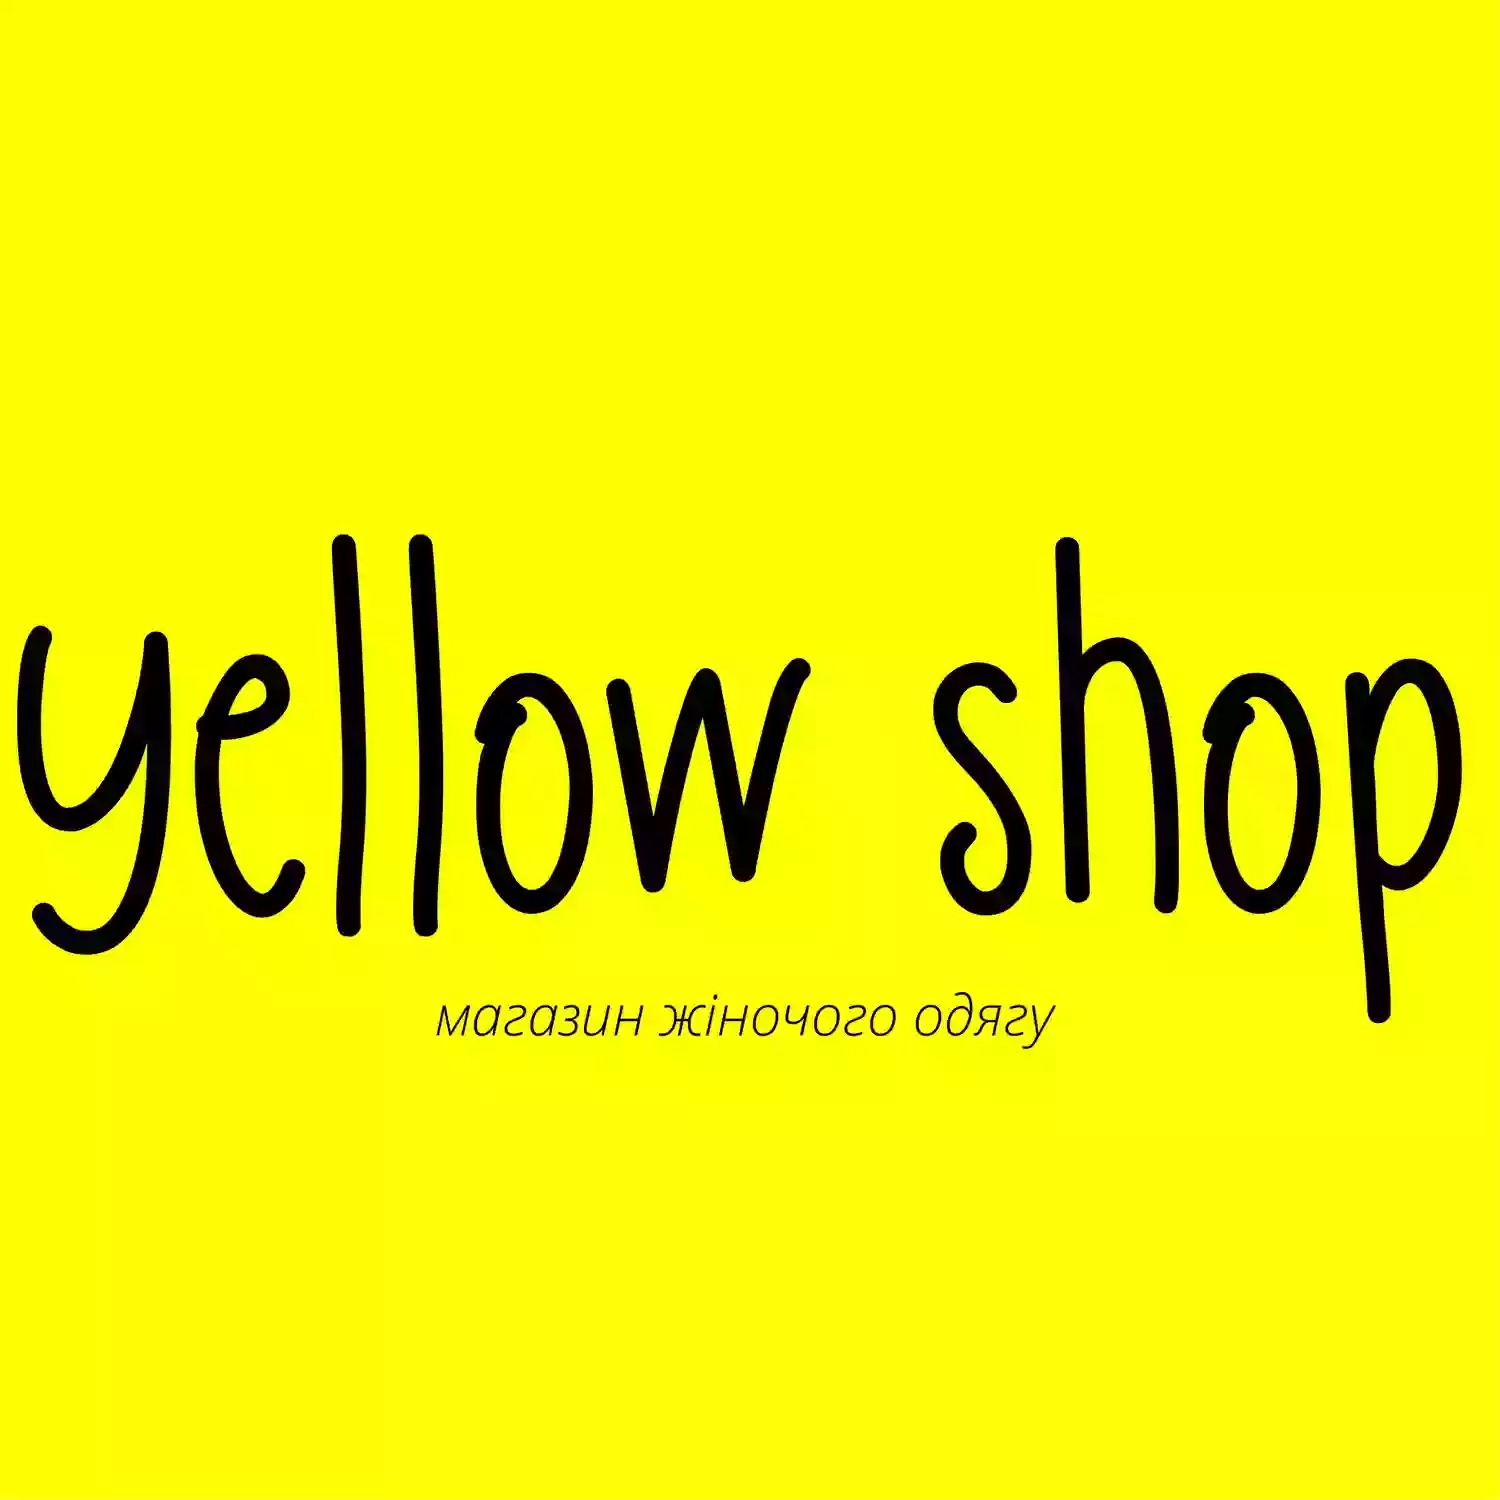 Yellow shop